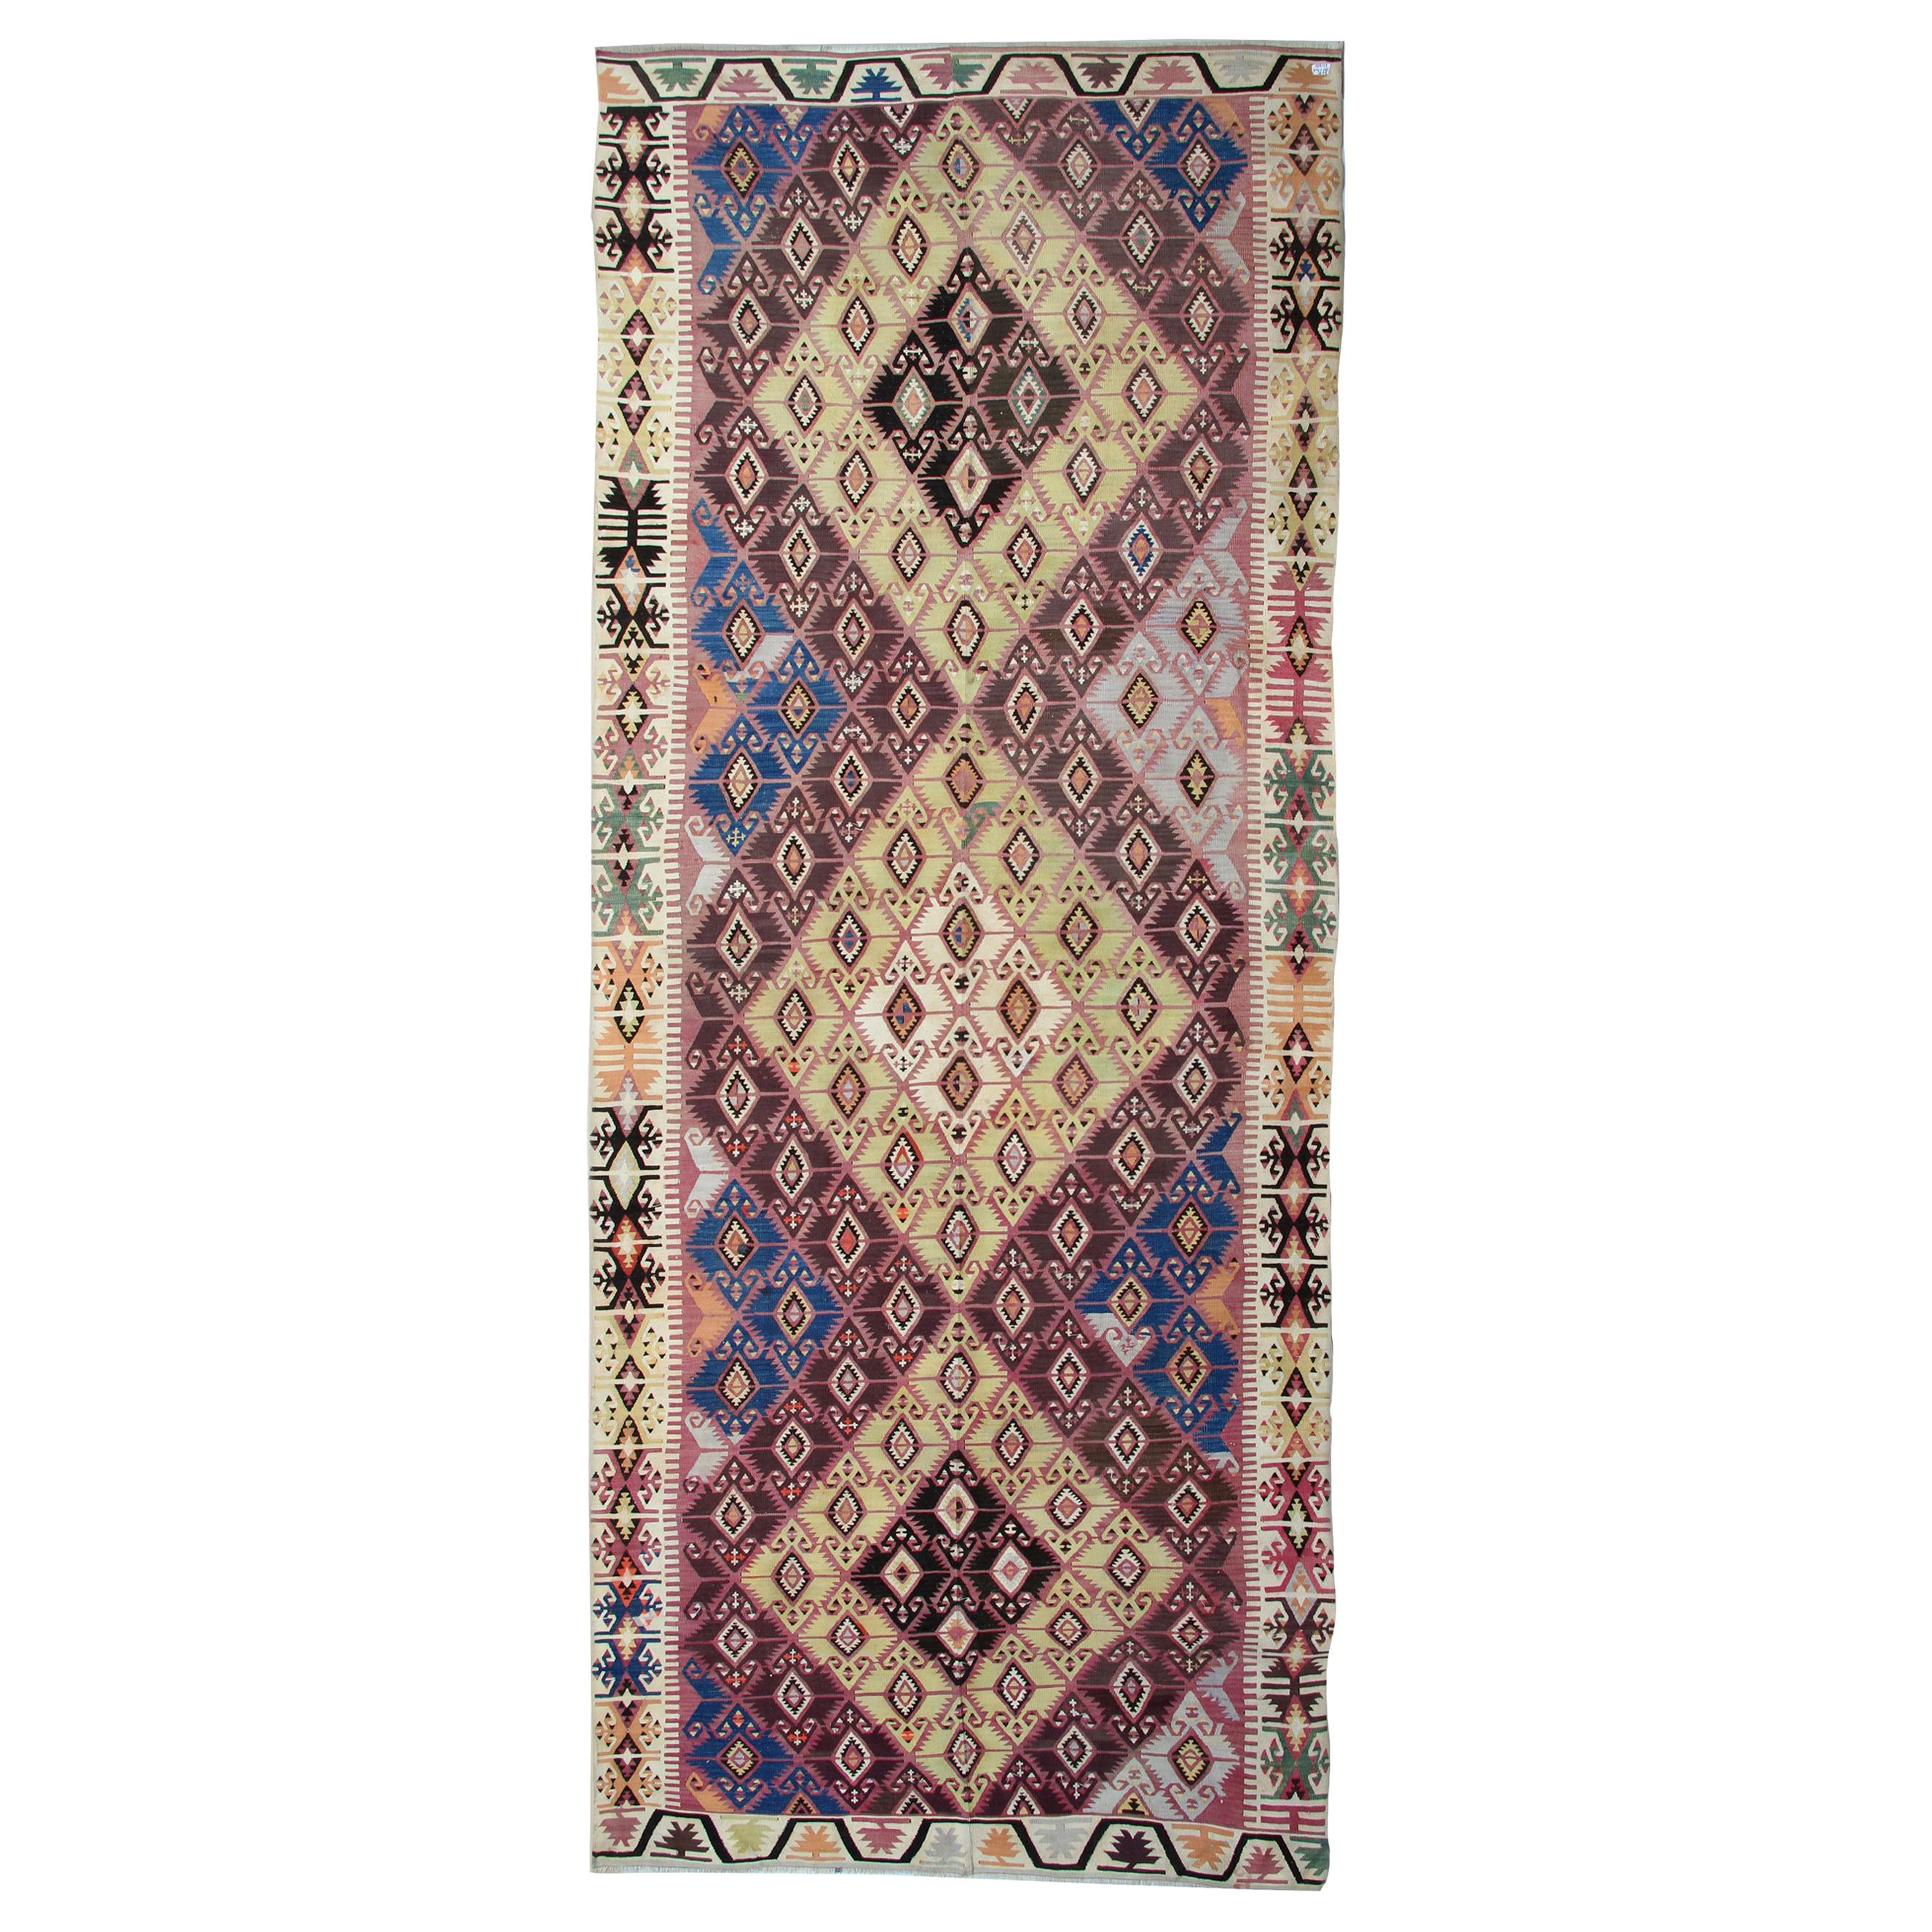 Tapis ancien, tapis artisanal Tapis oriental Tapis de couloir Kilim turc